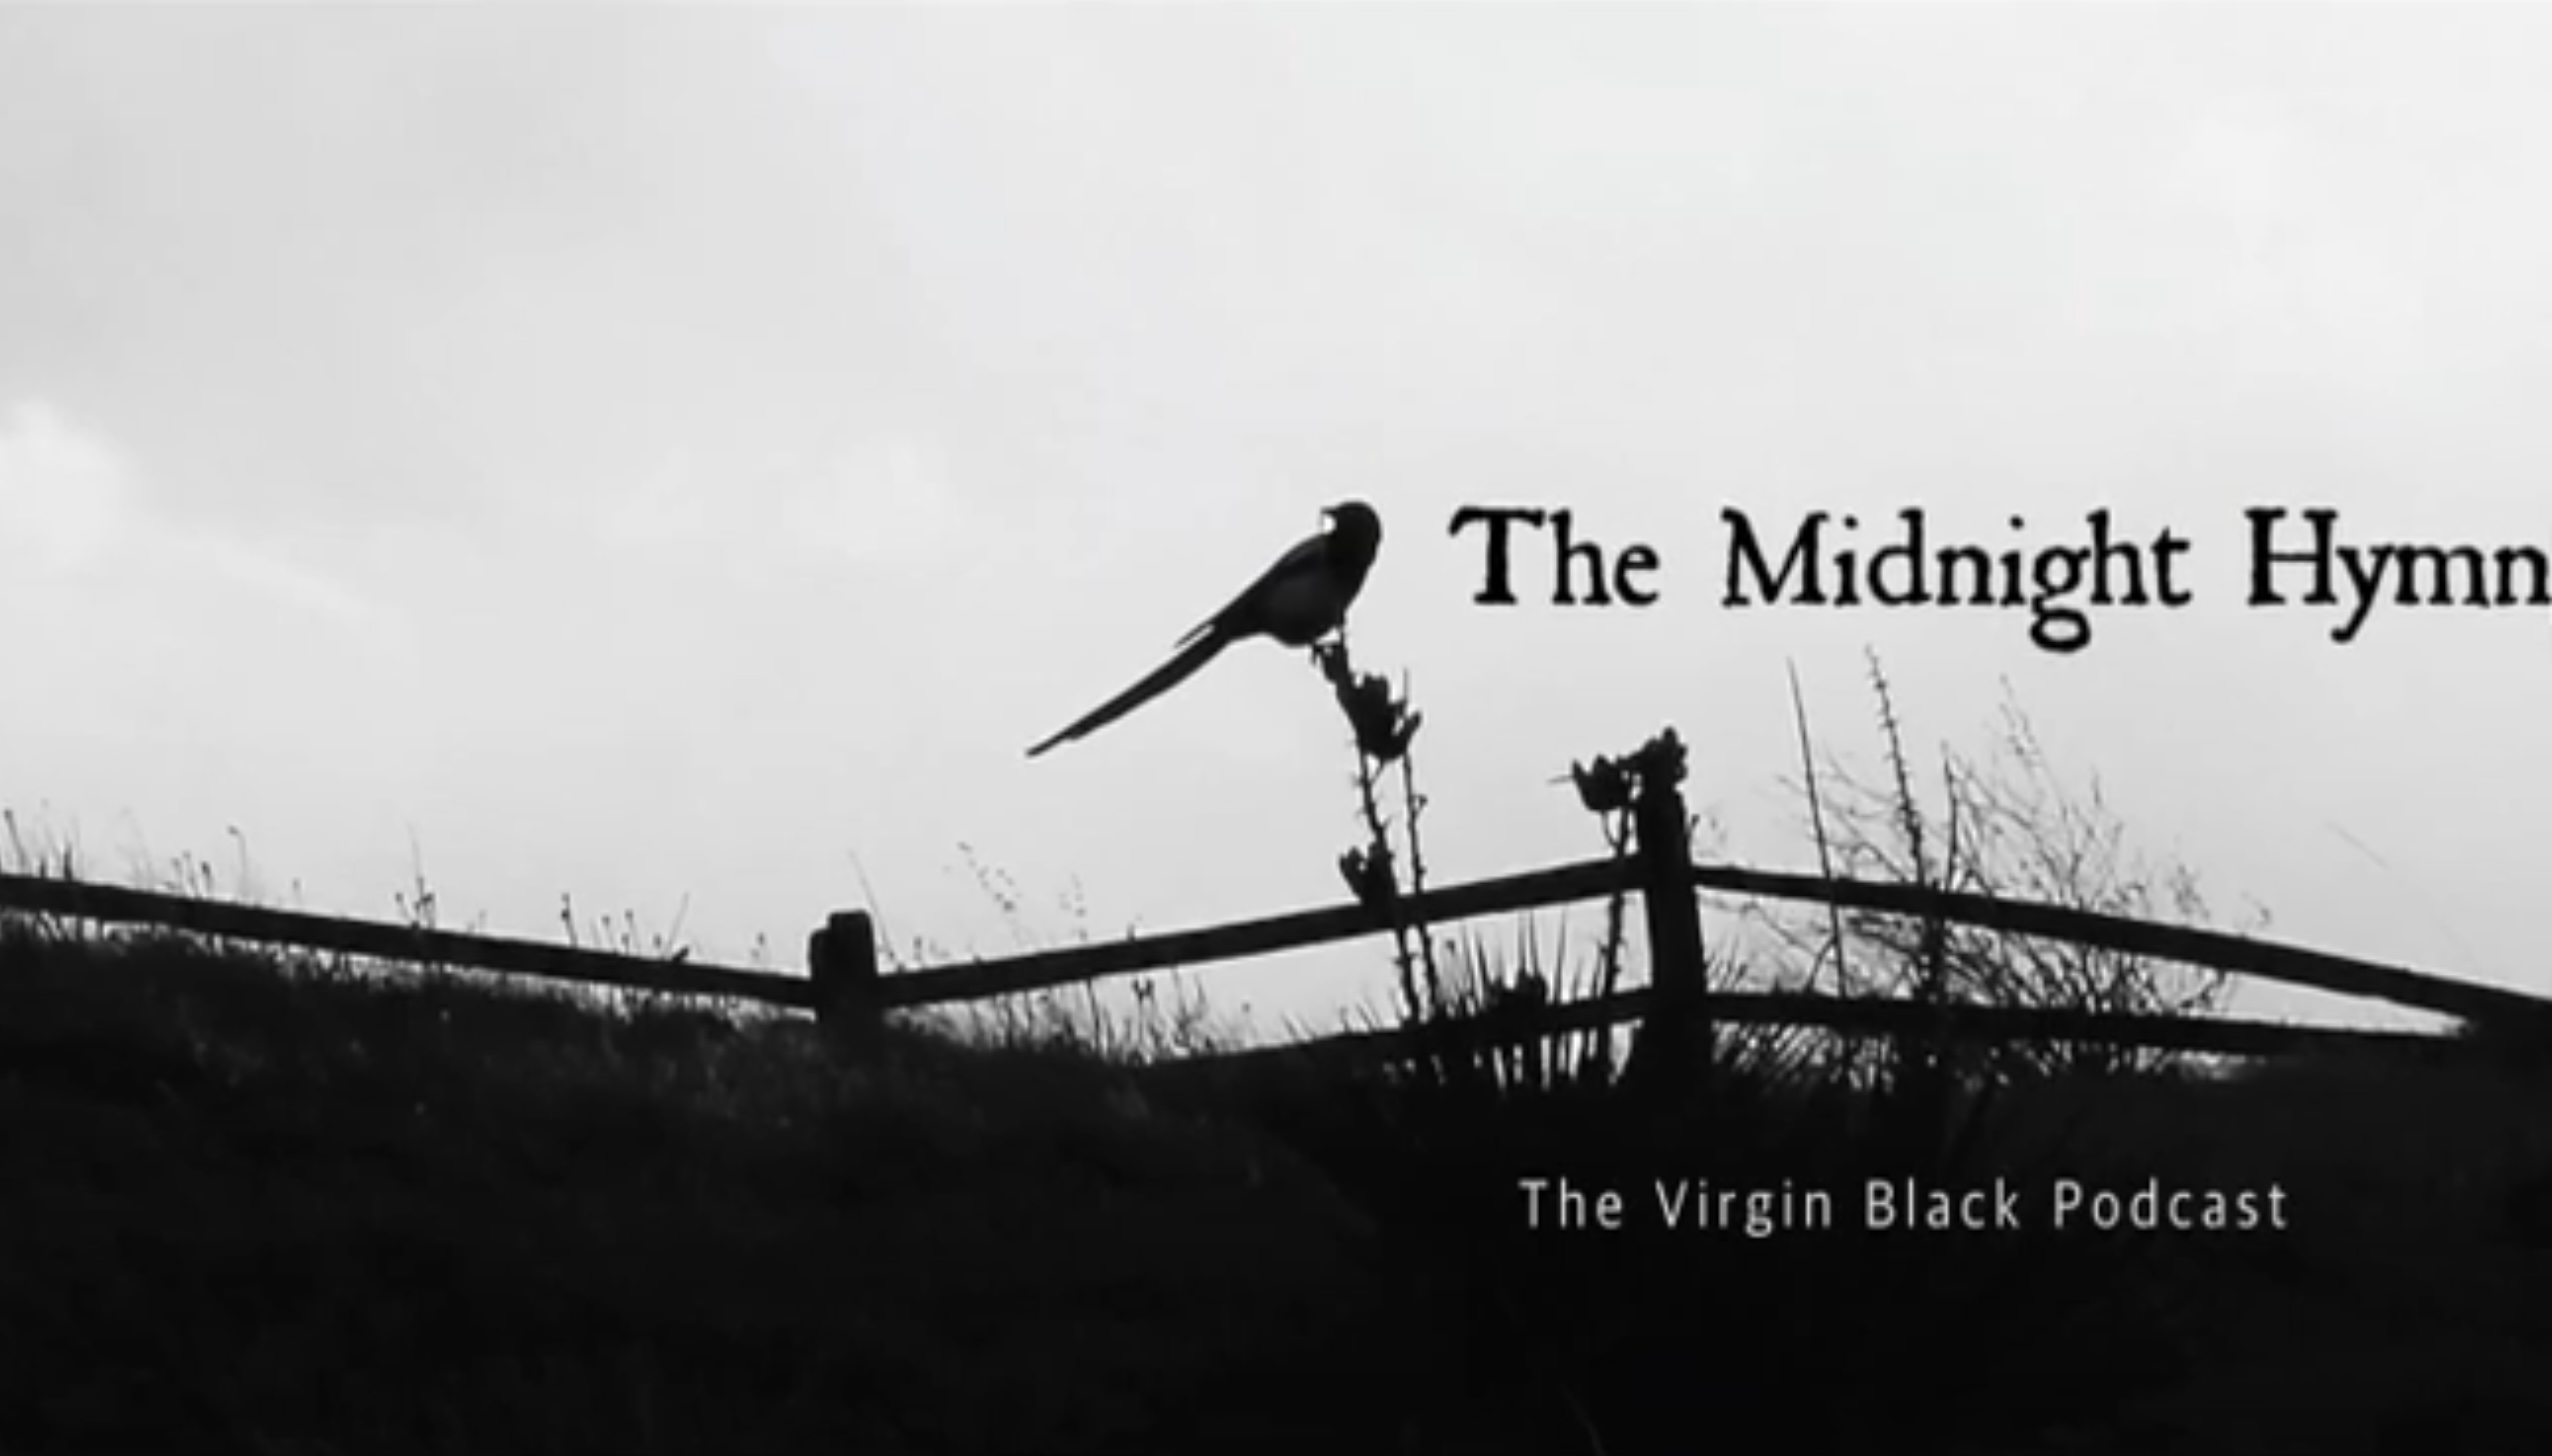 The Midnight Hymn Podcast – Virgin Black